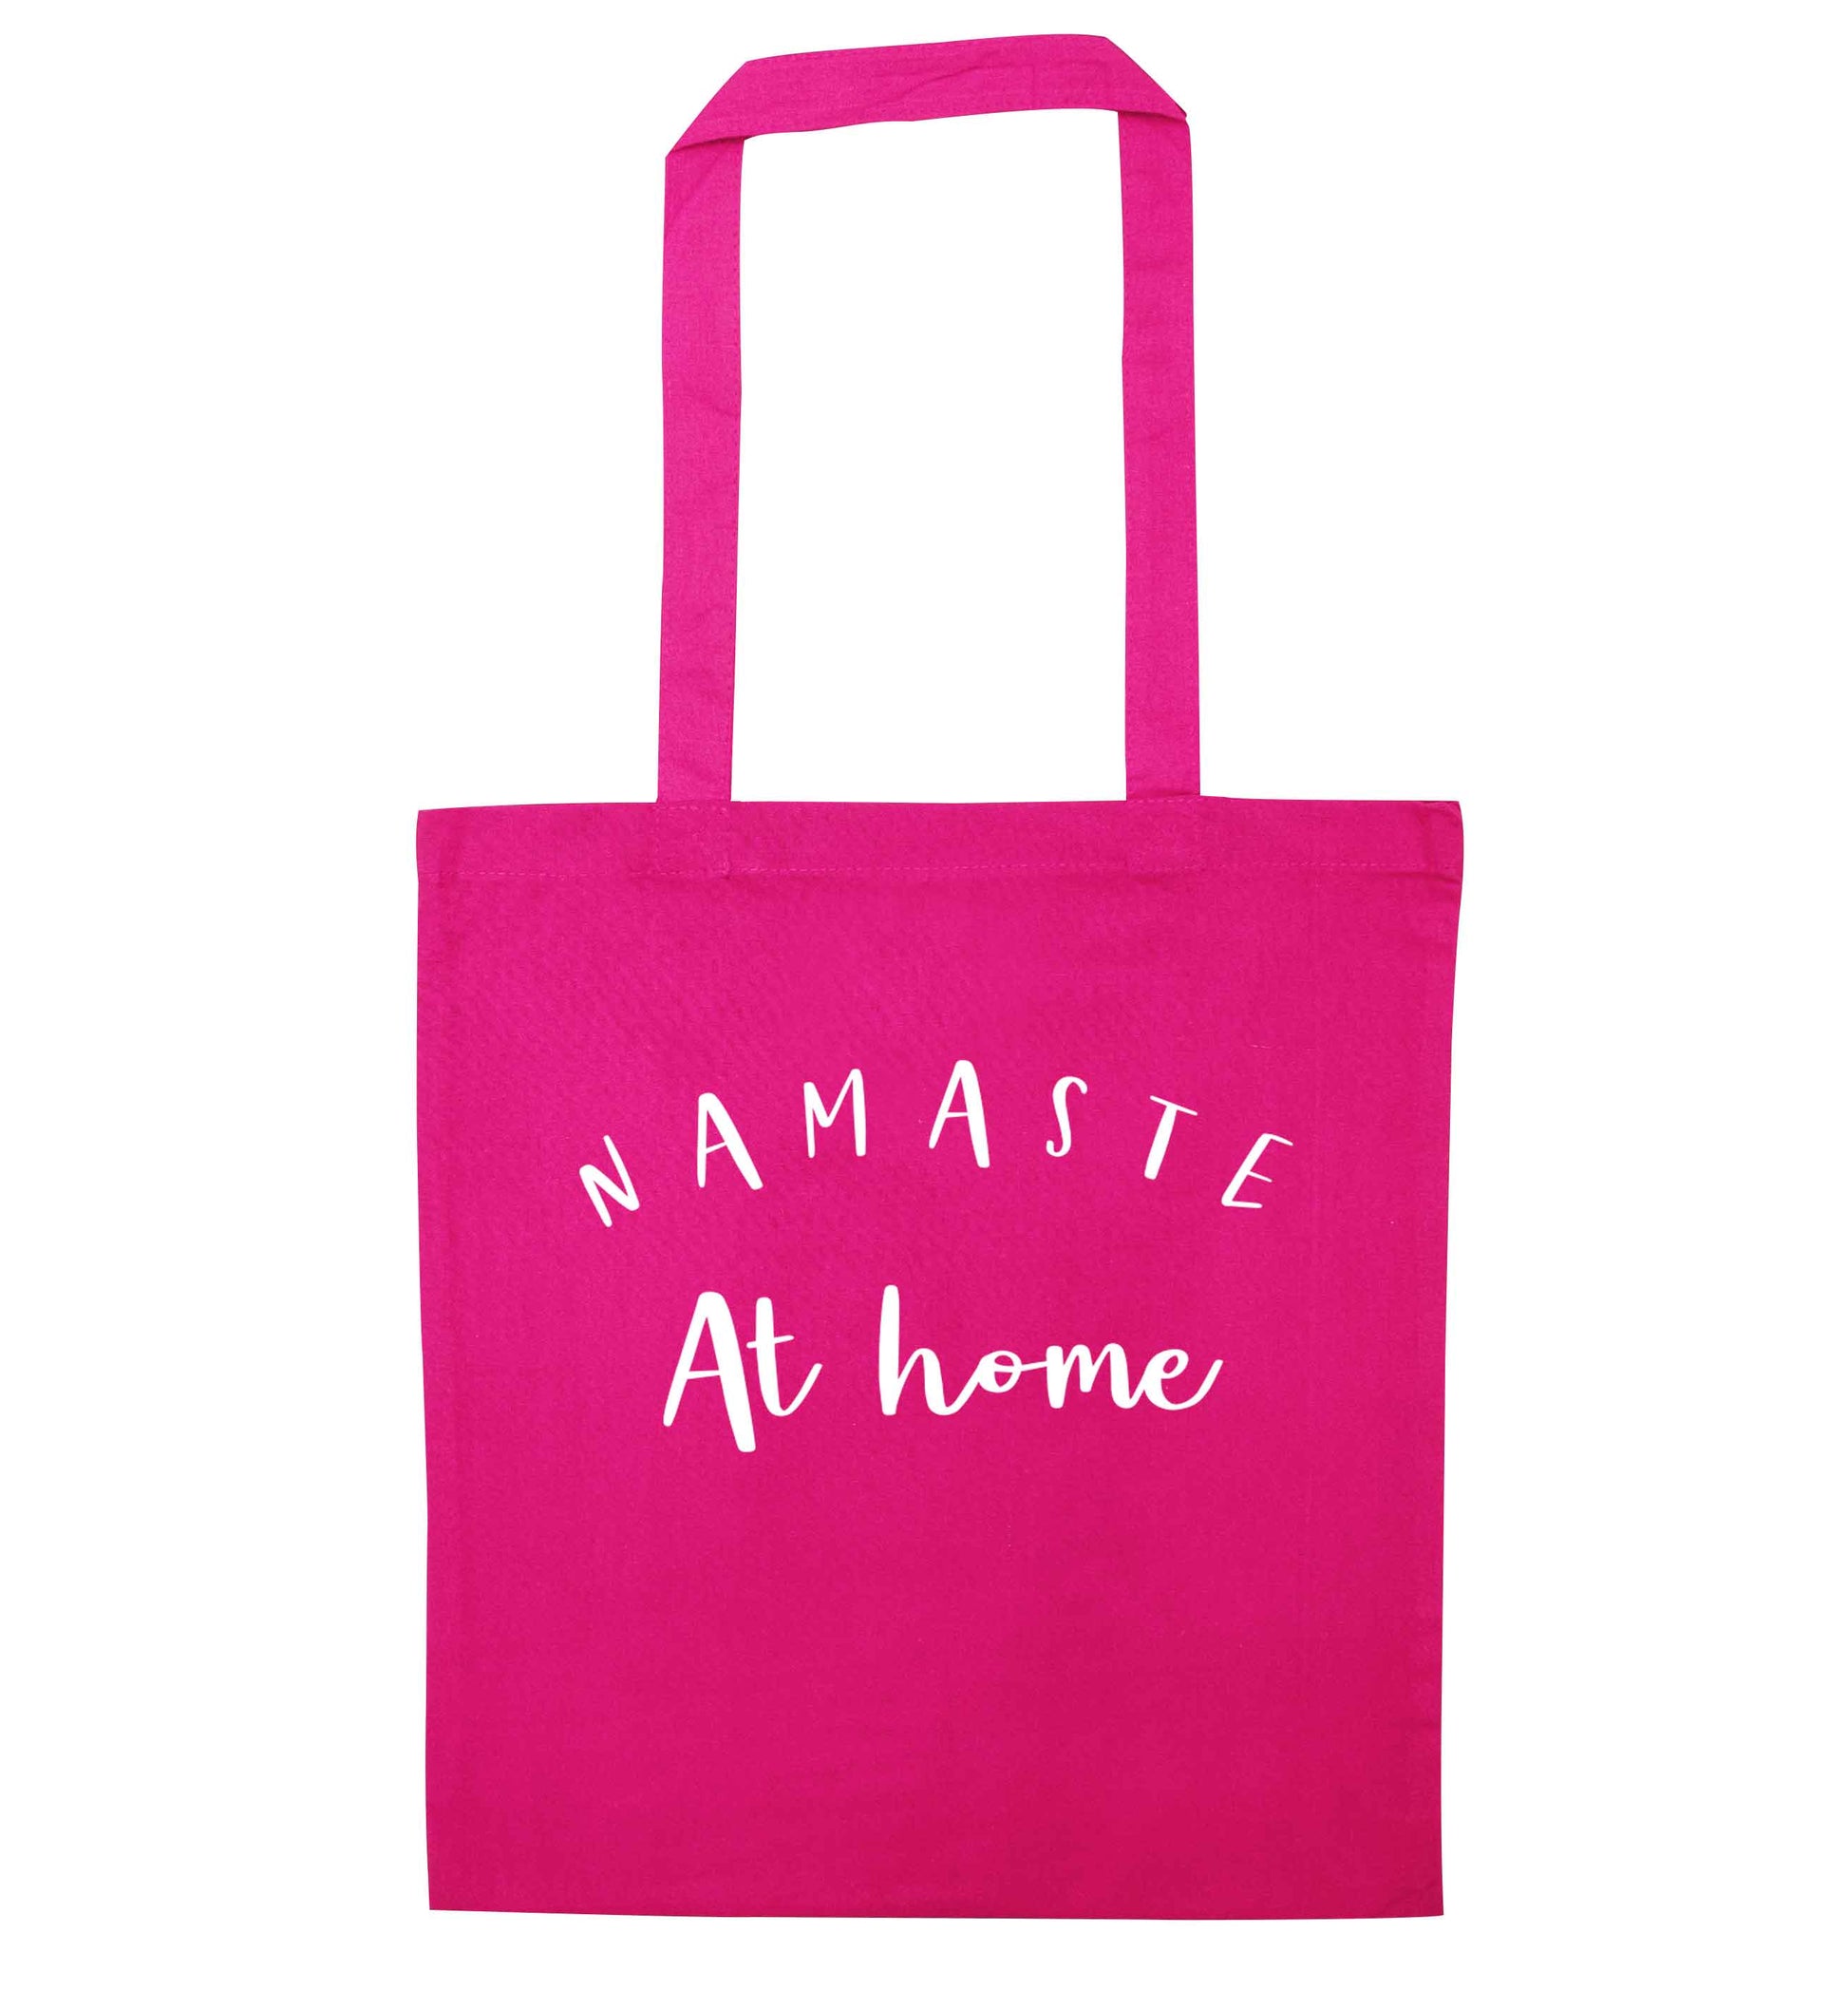 Namaste at home pink tote bag